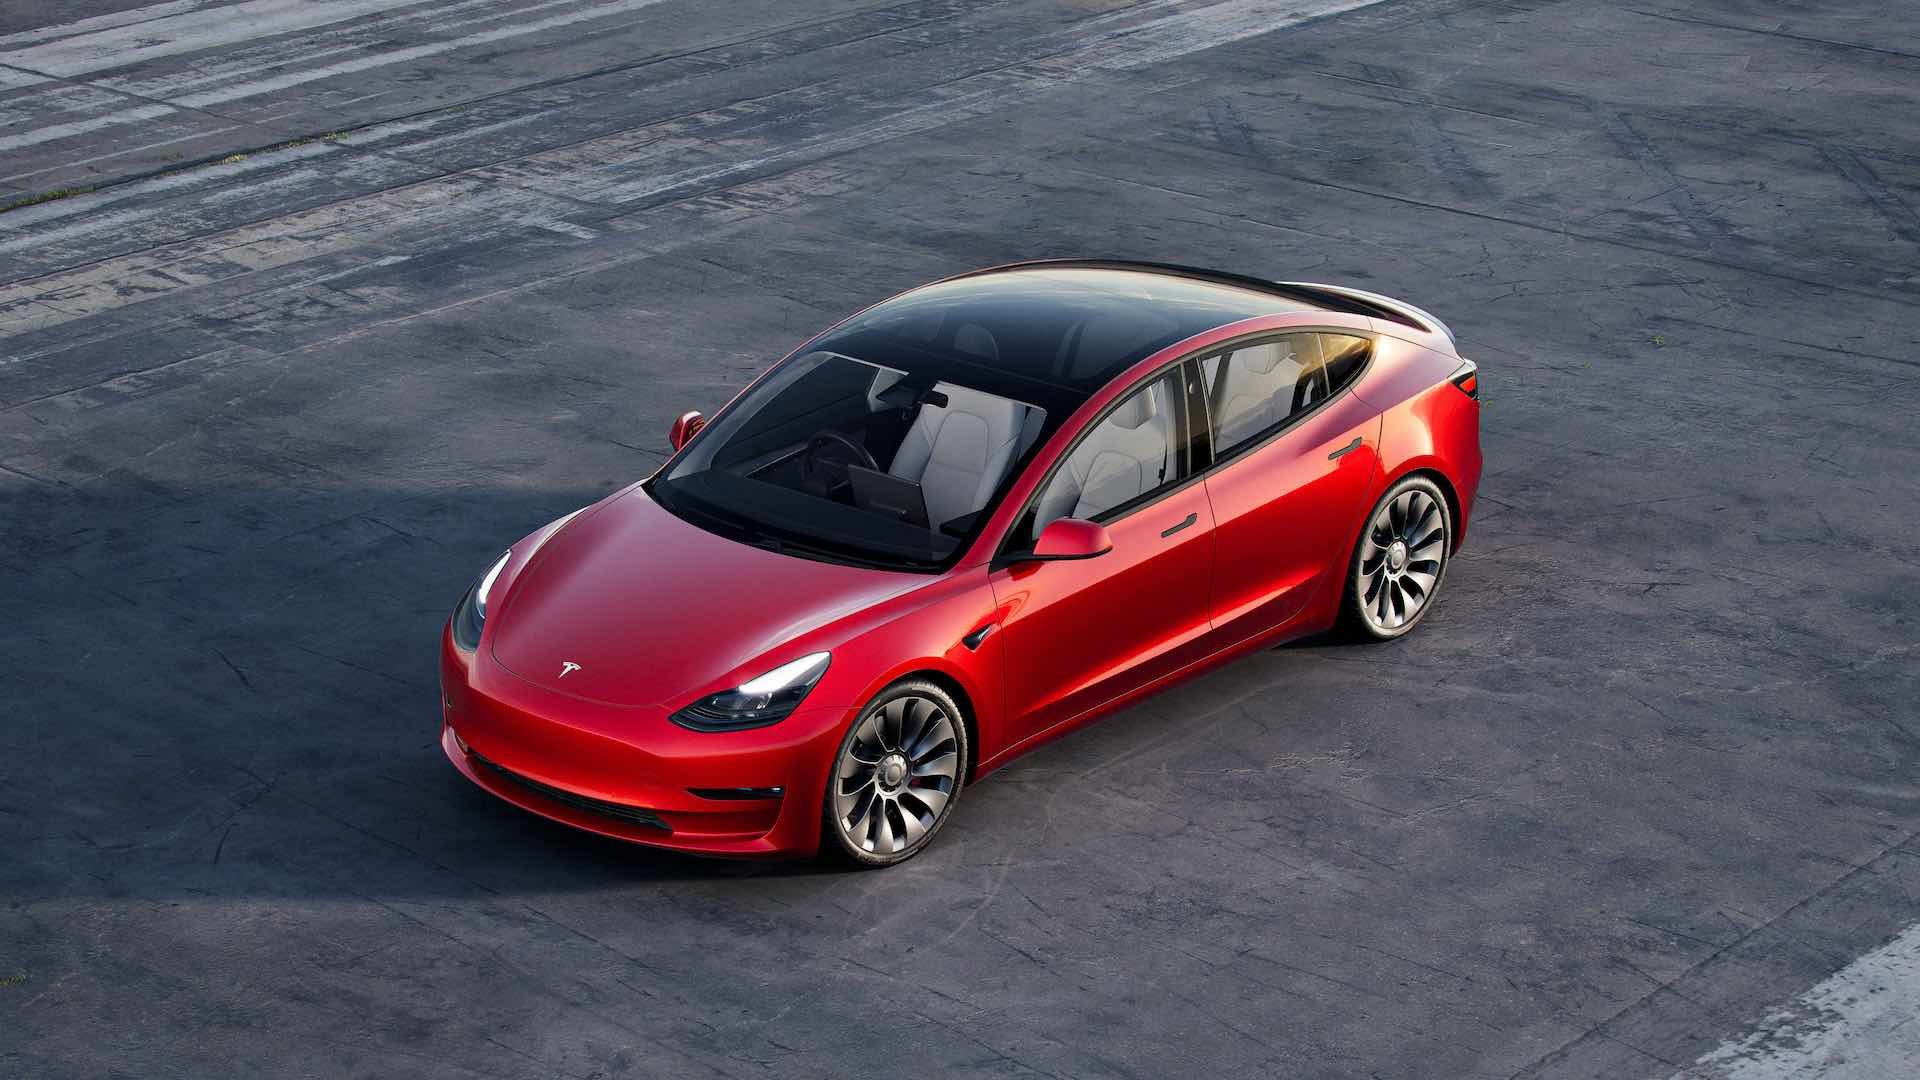 Tesla recalls 2.2 million U.S. vehicles for light issues